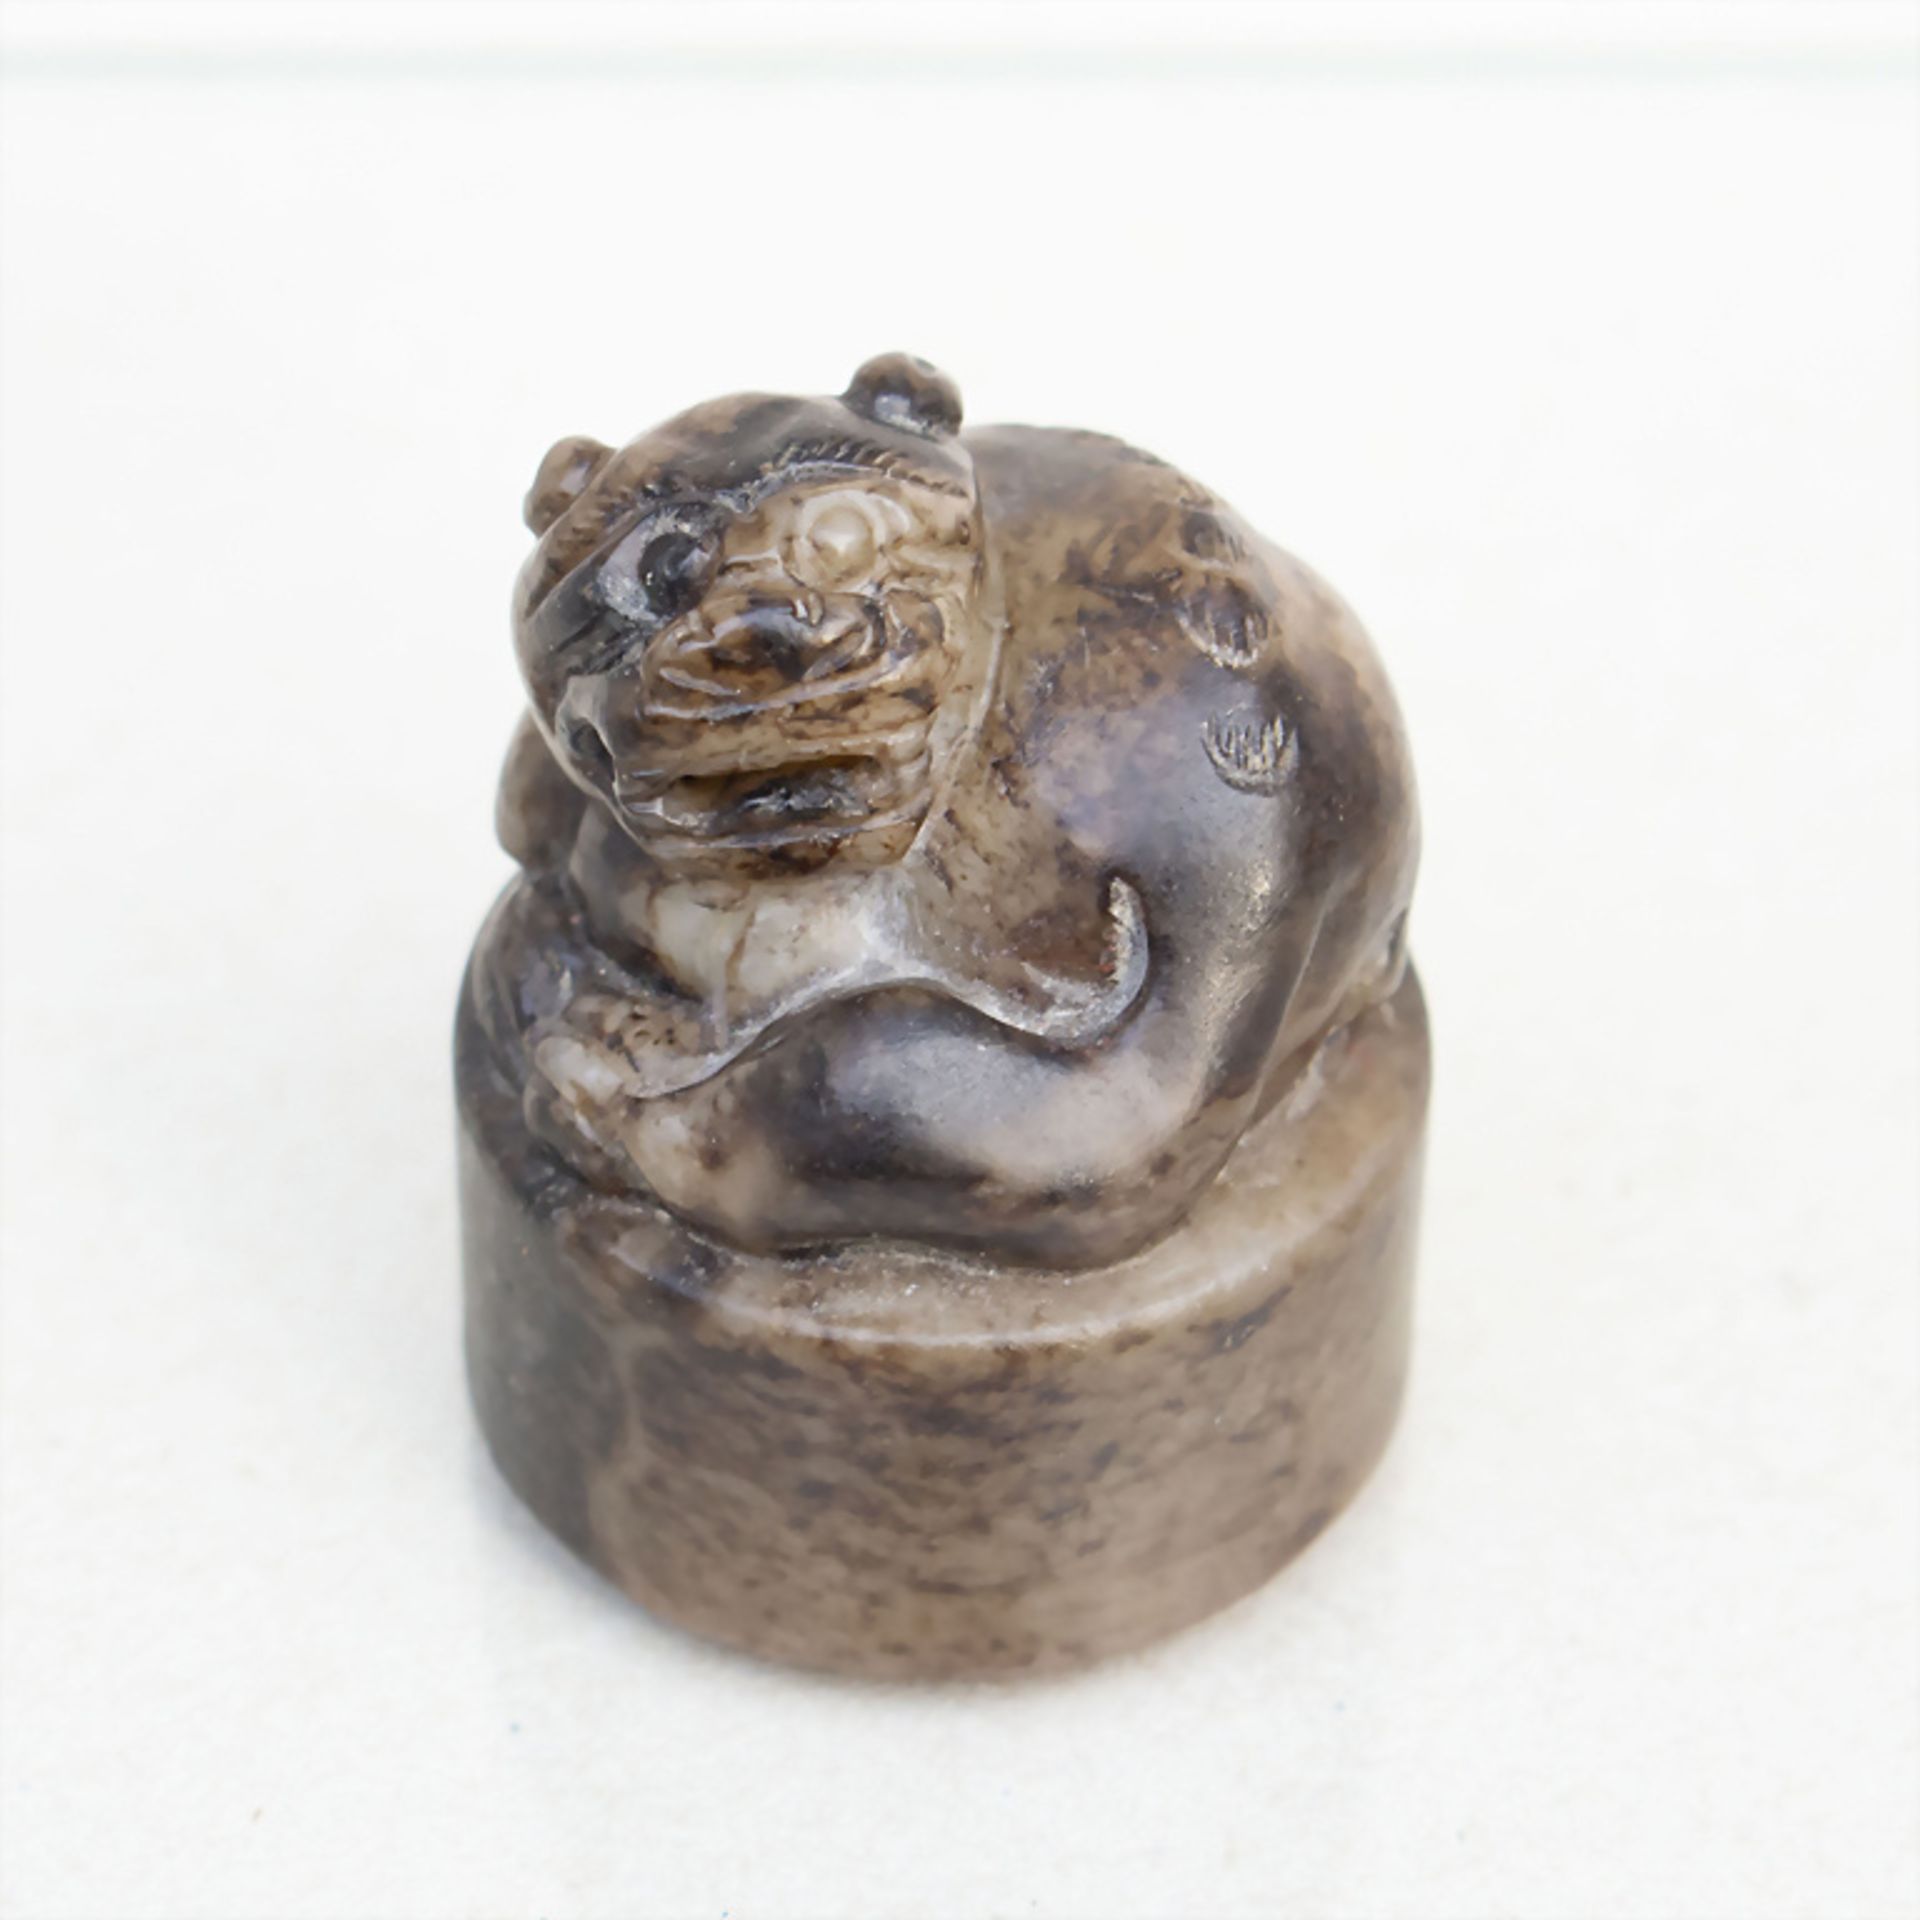 Jadesiegel 'Löwe' / A jade seal 'Lion', China, Qing-Zeit, 19.-20. Jh.